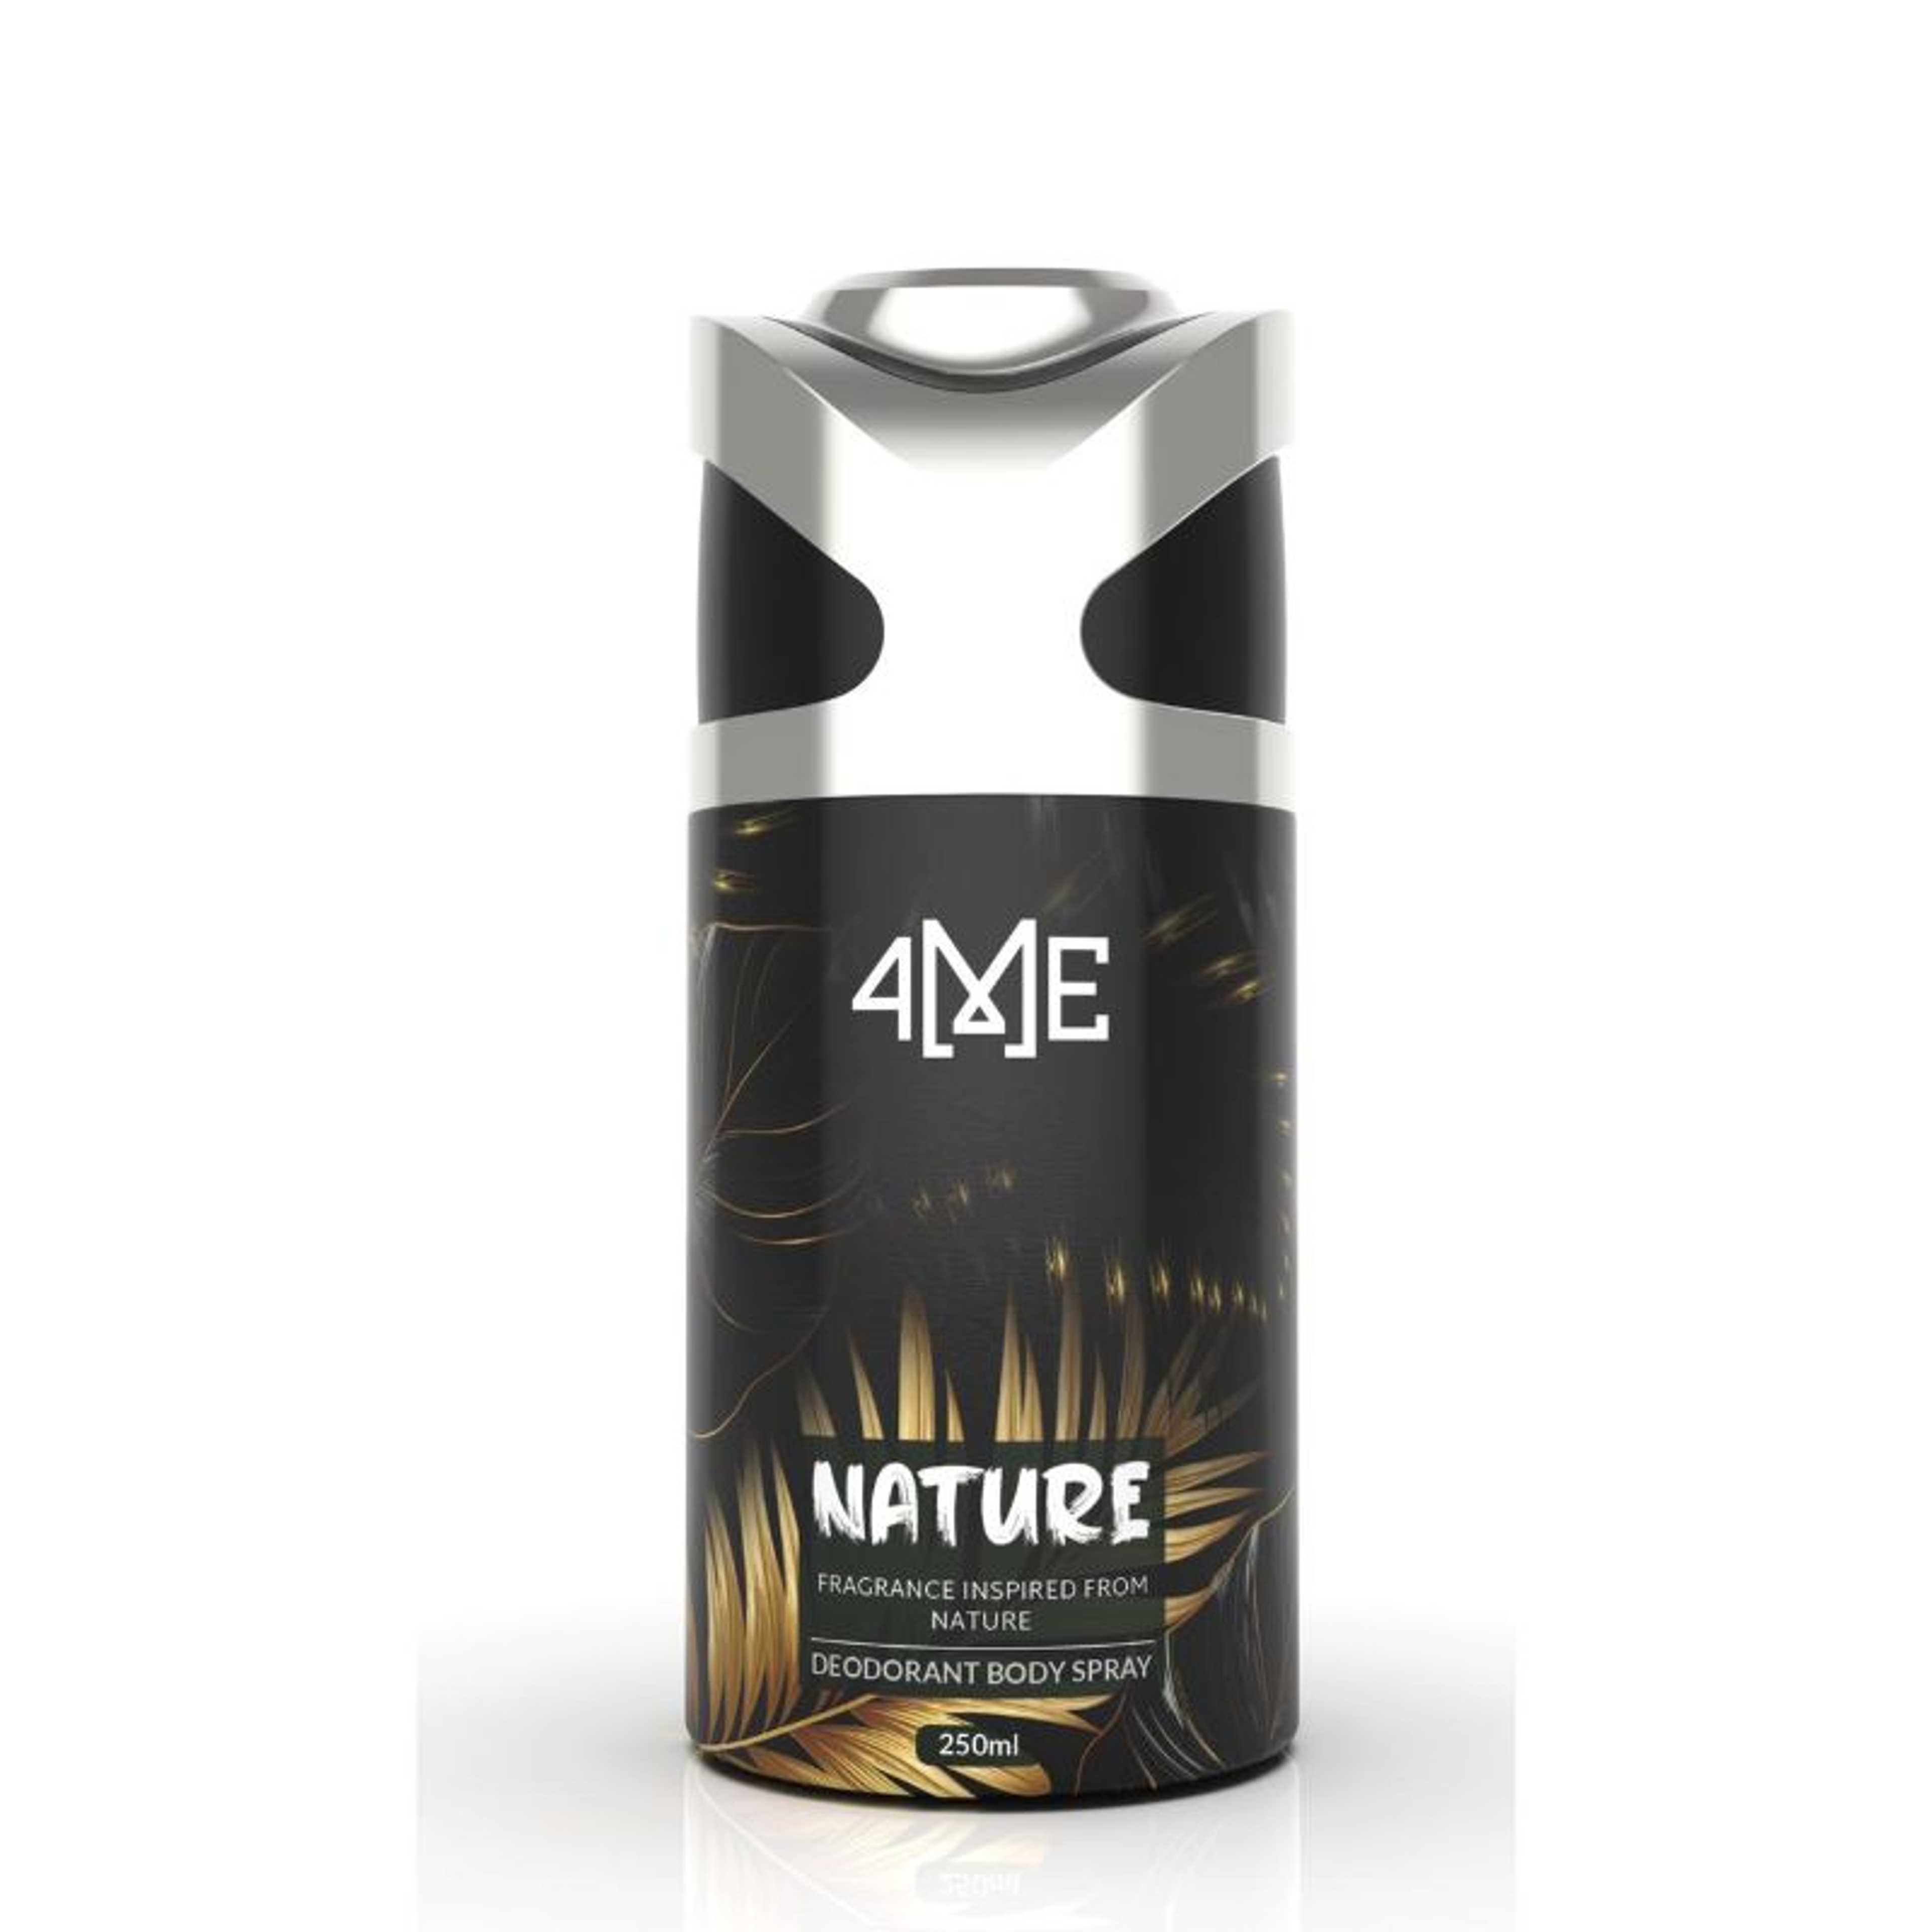 4ME Nature Deodorant Body Spray - 250ml